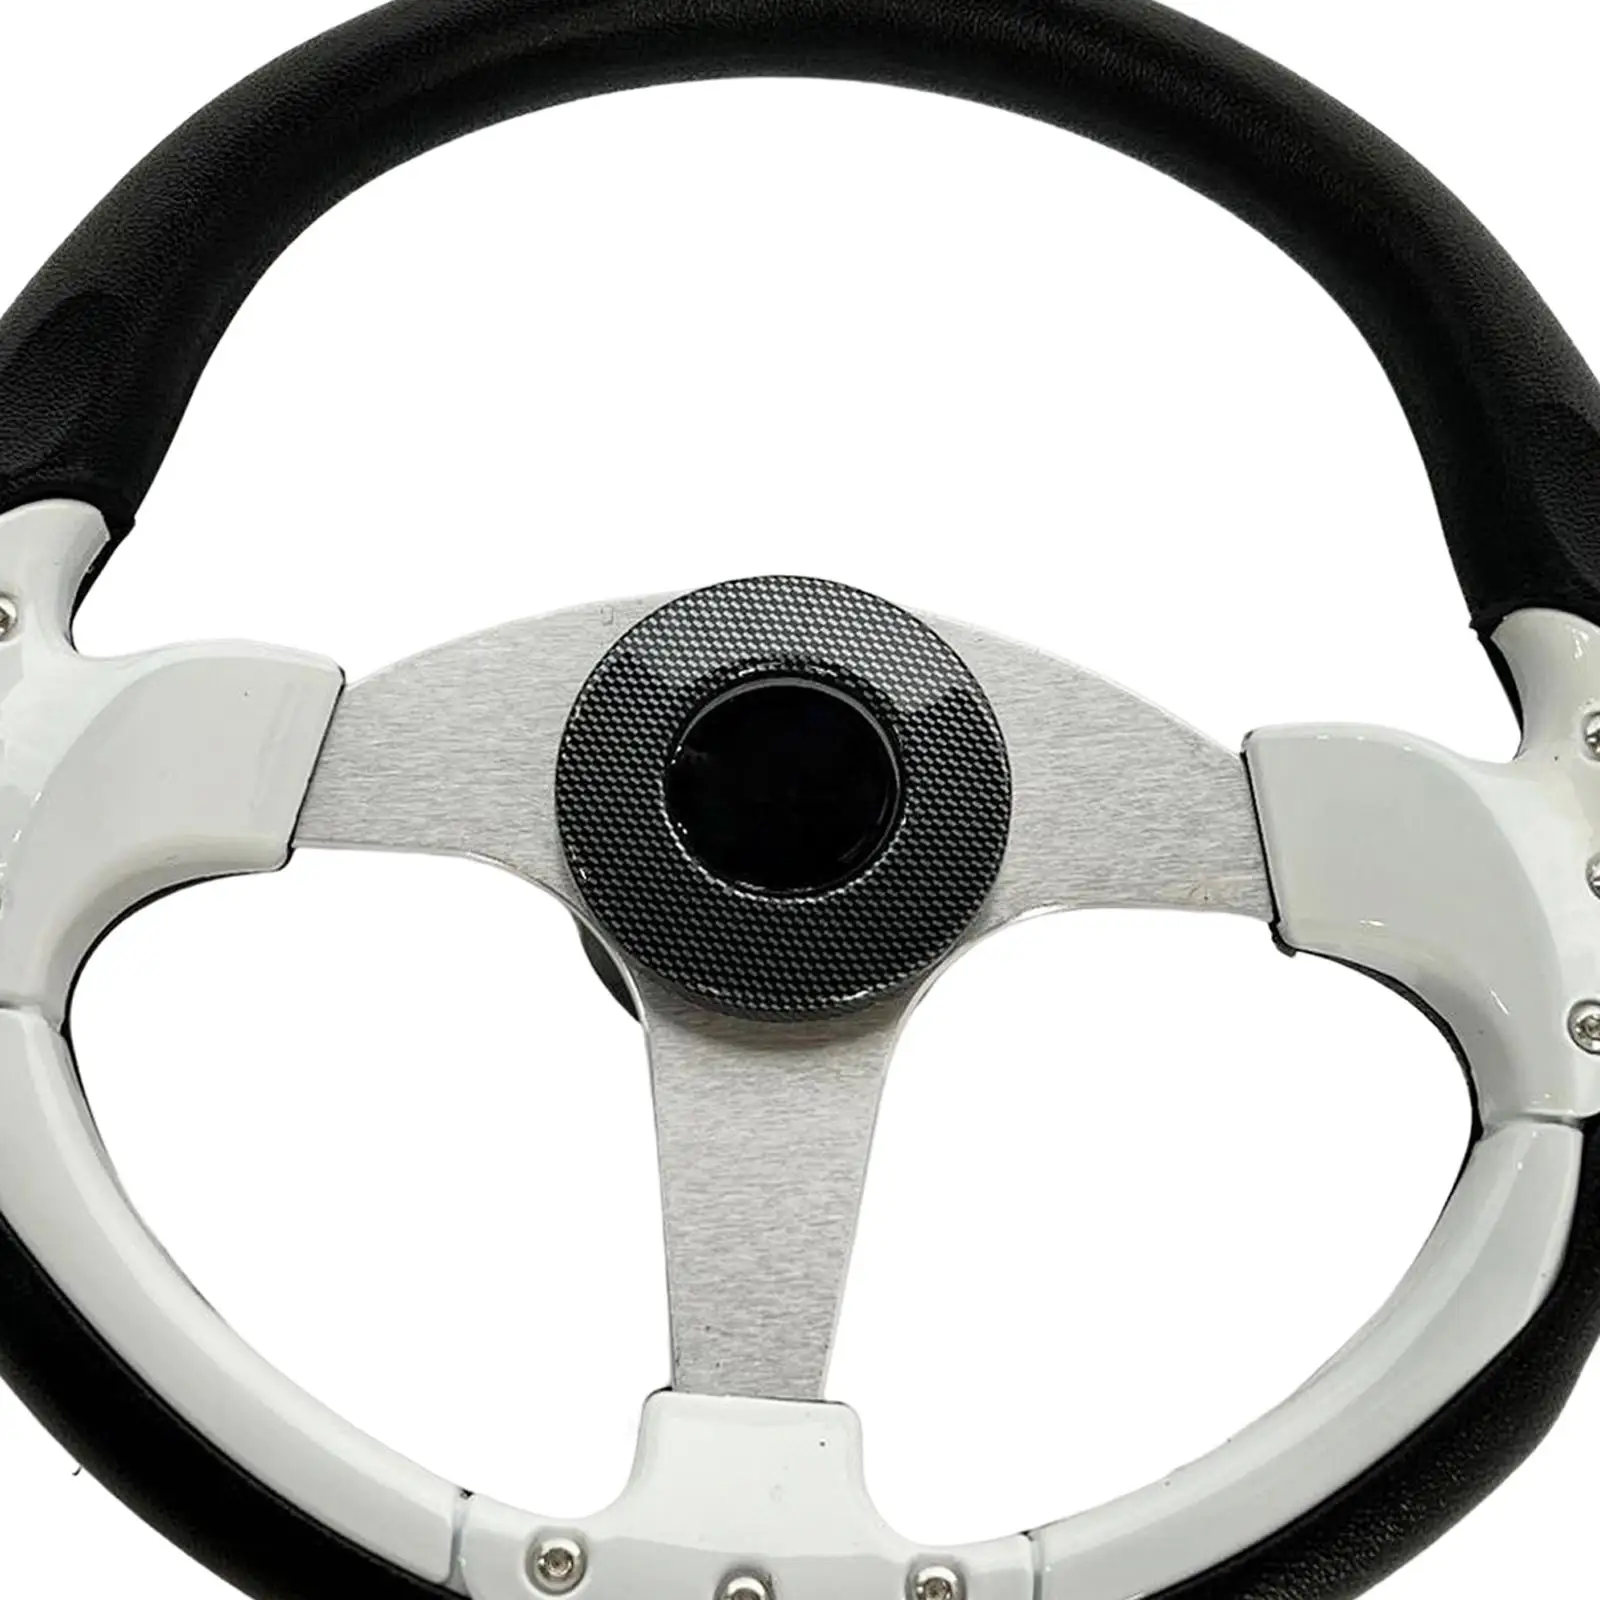 Universal 350mm Boat Steering Wheel AntiSlip 3/4 Tapered Shaft Nondirectional Ergonomic Design Replacement for Yachts